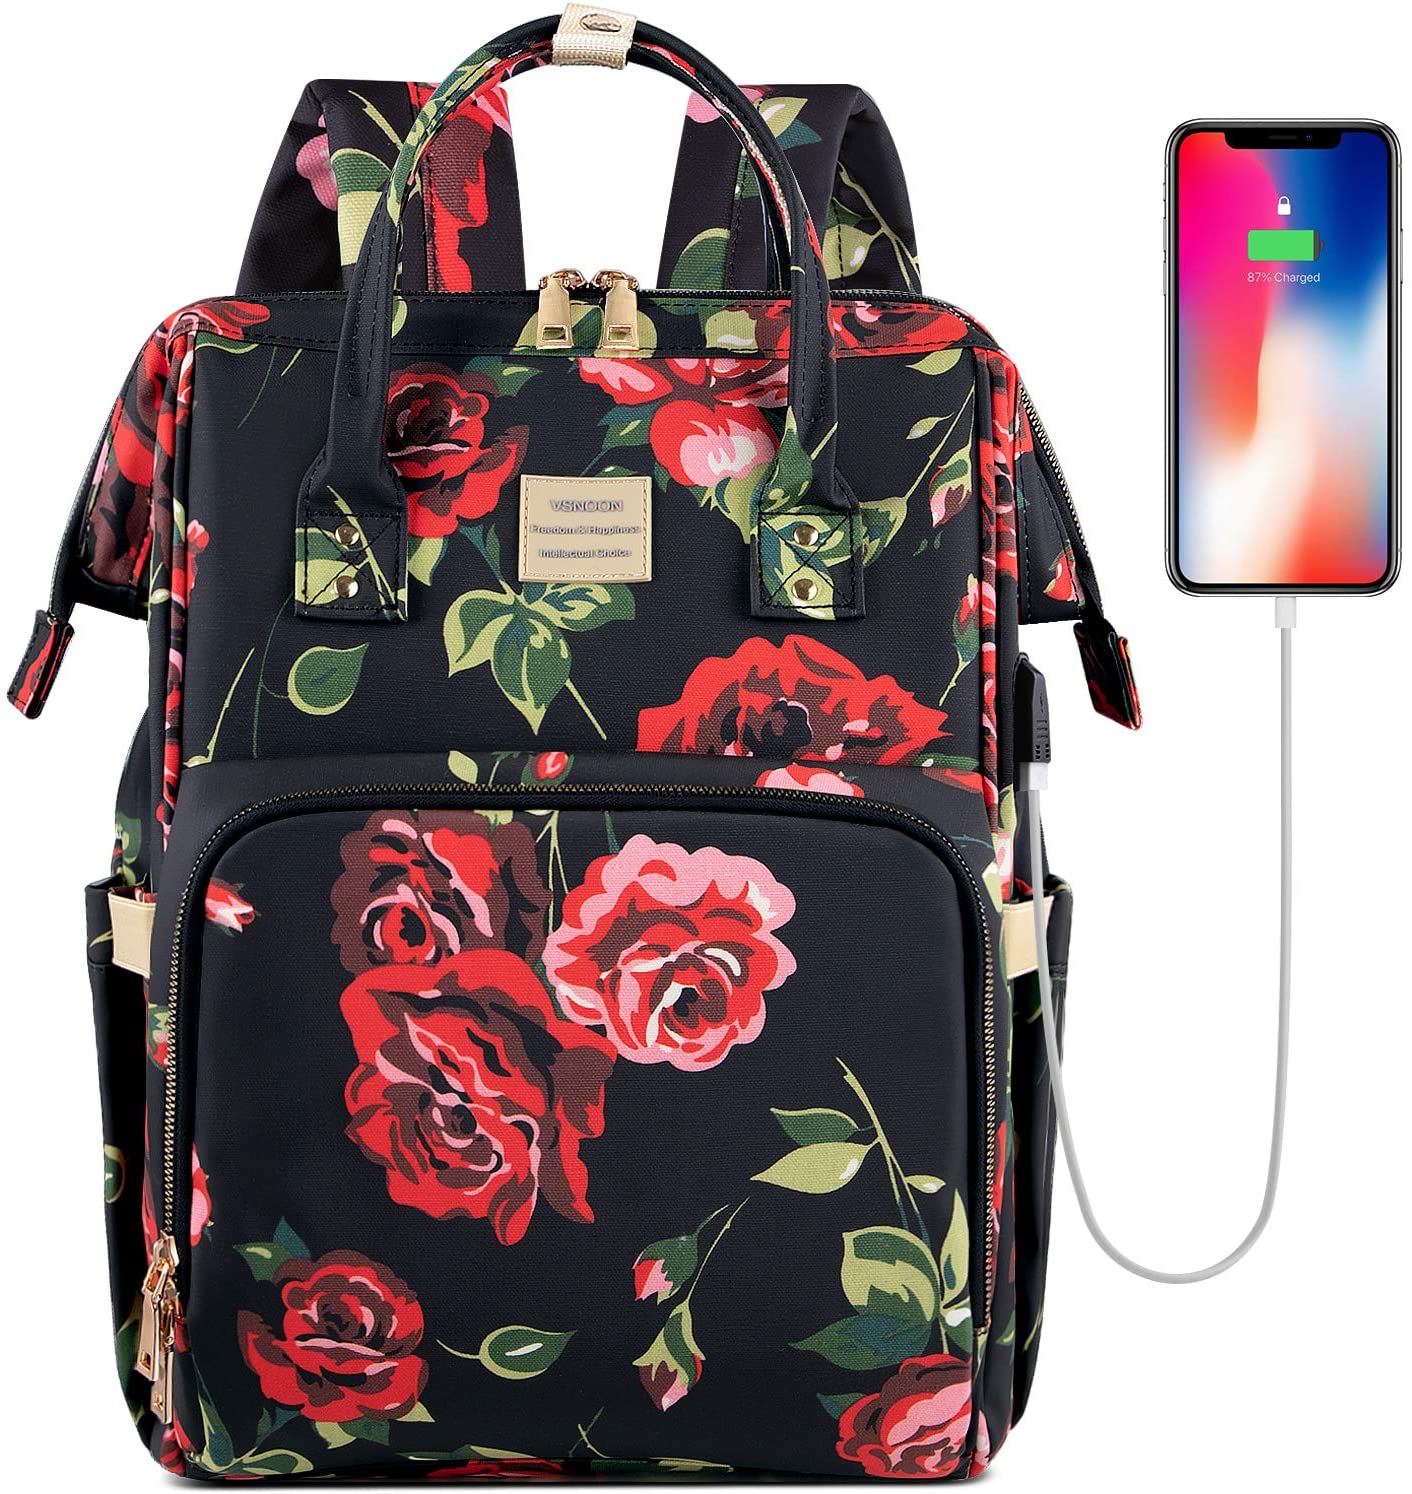  VSNOON Stylish College School Backpack